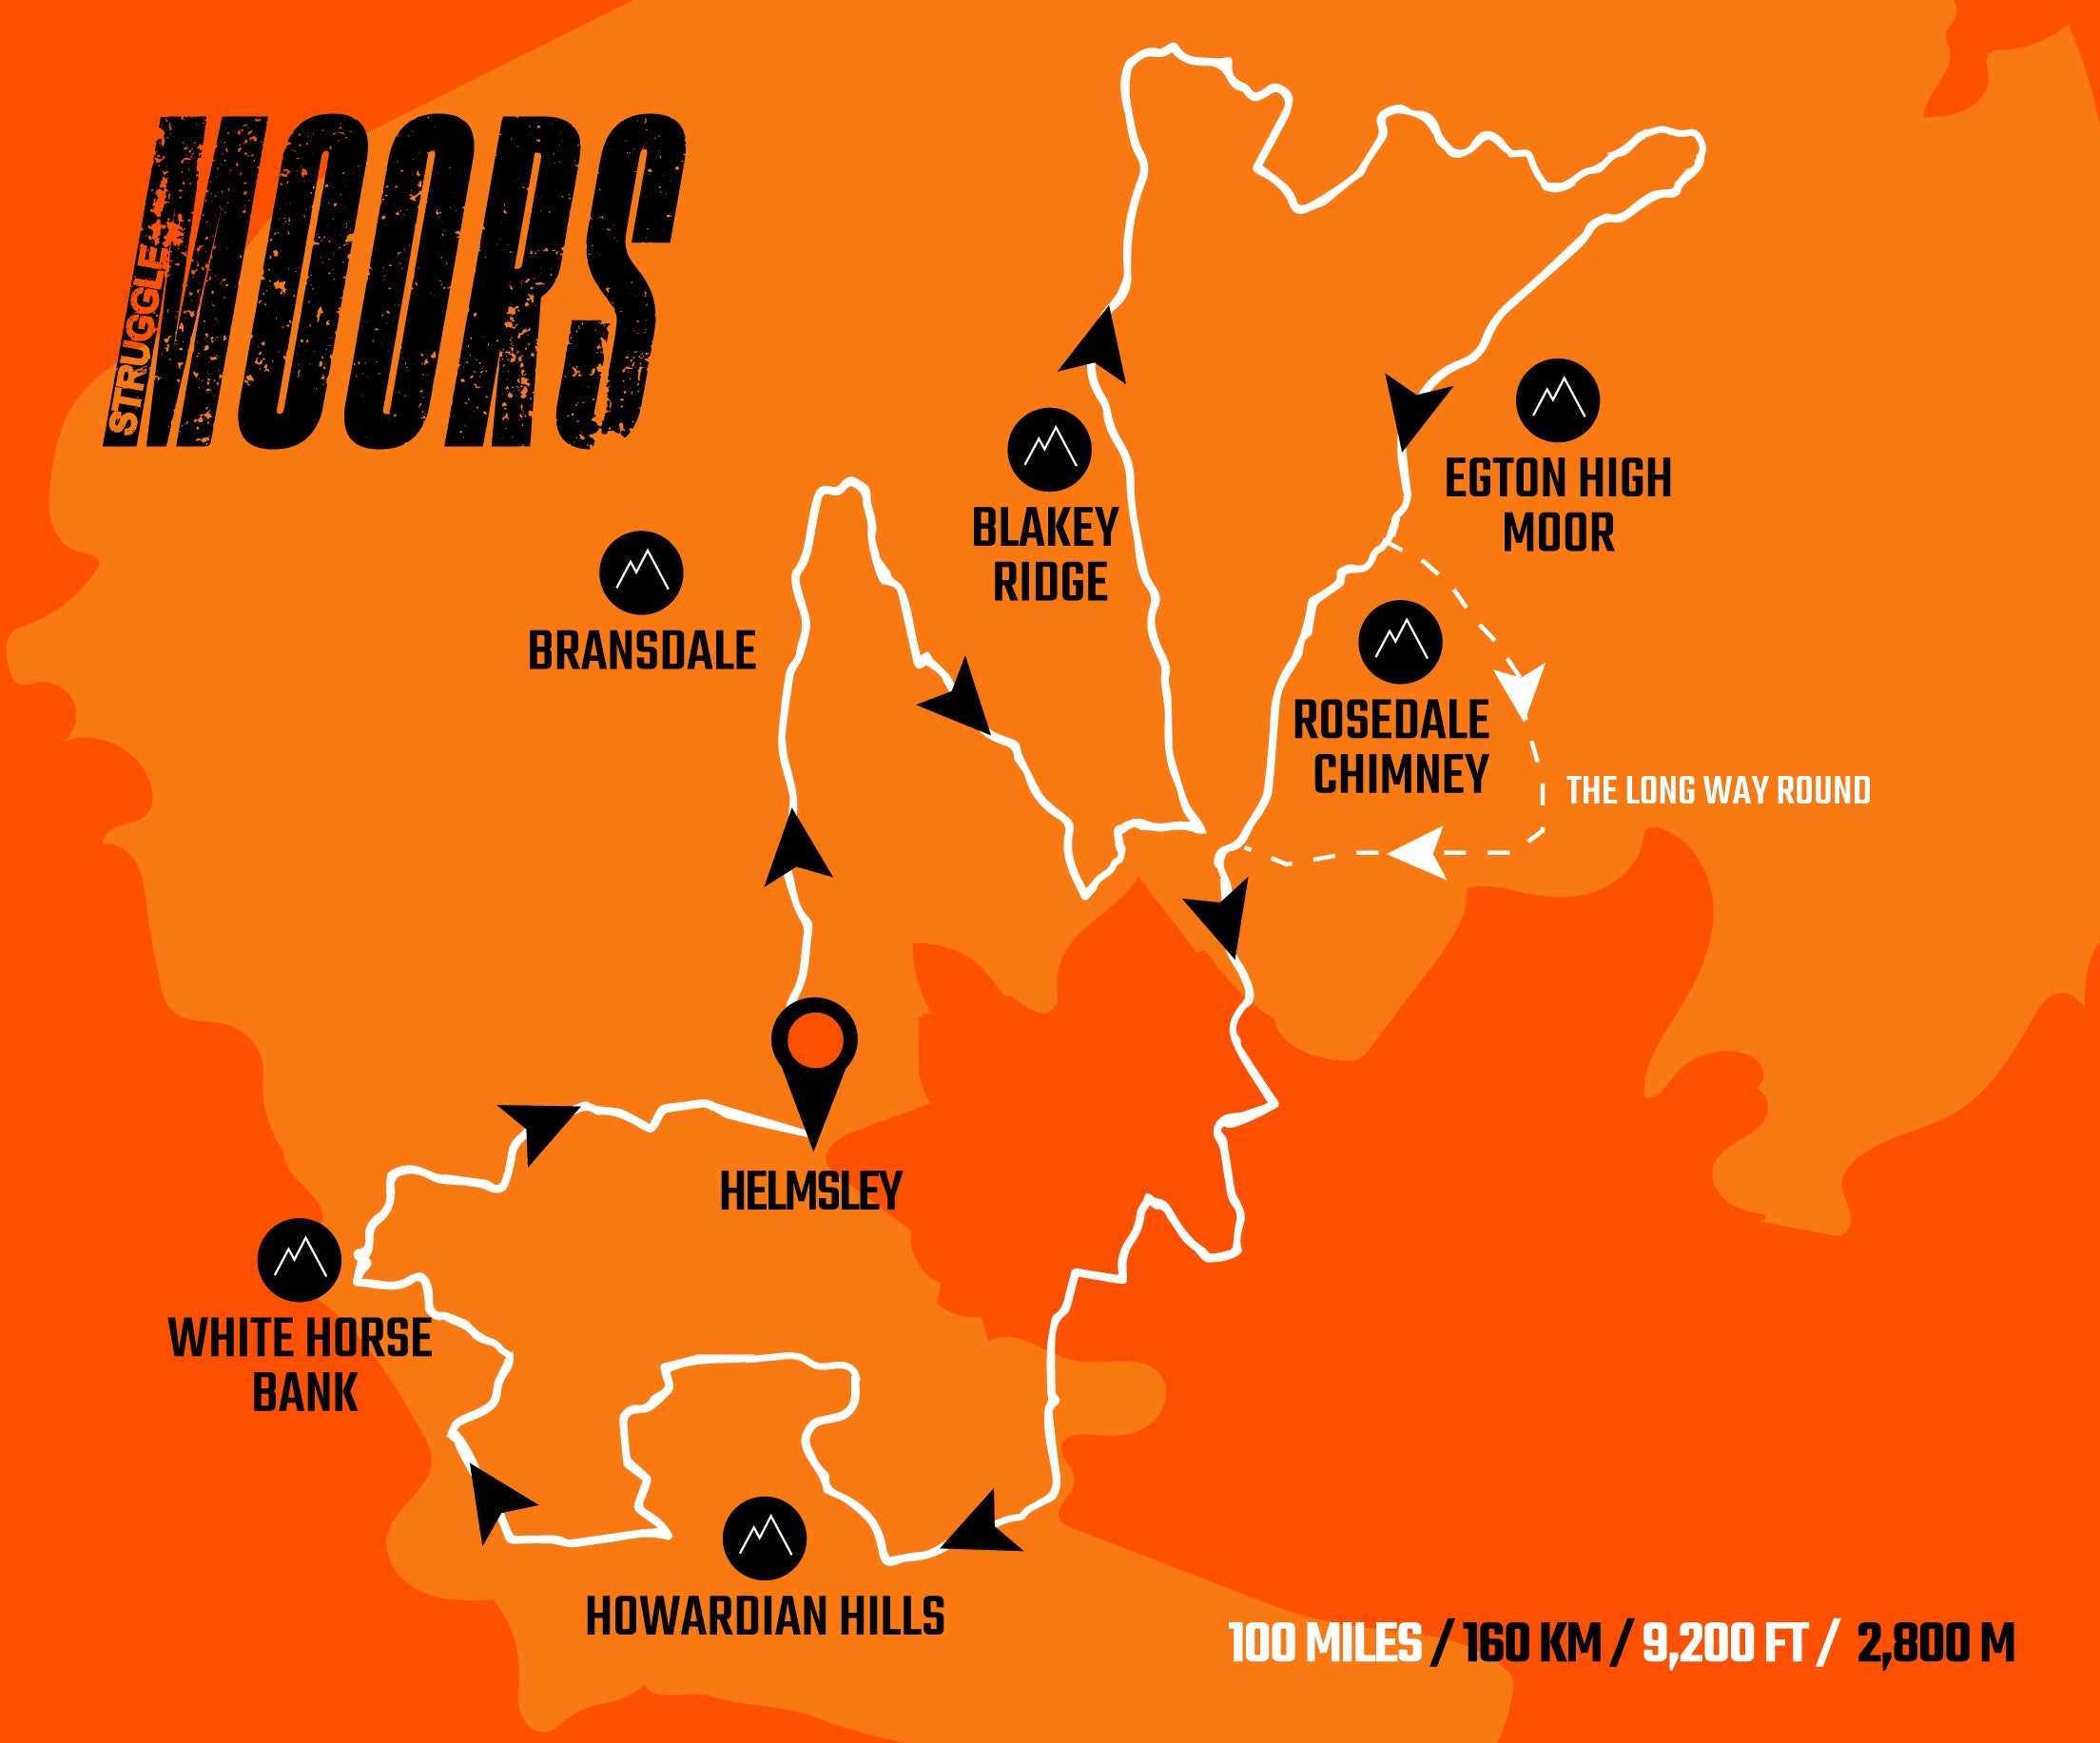 Struggle Moors sportive route